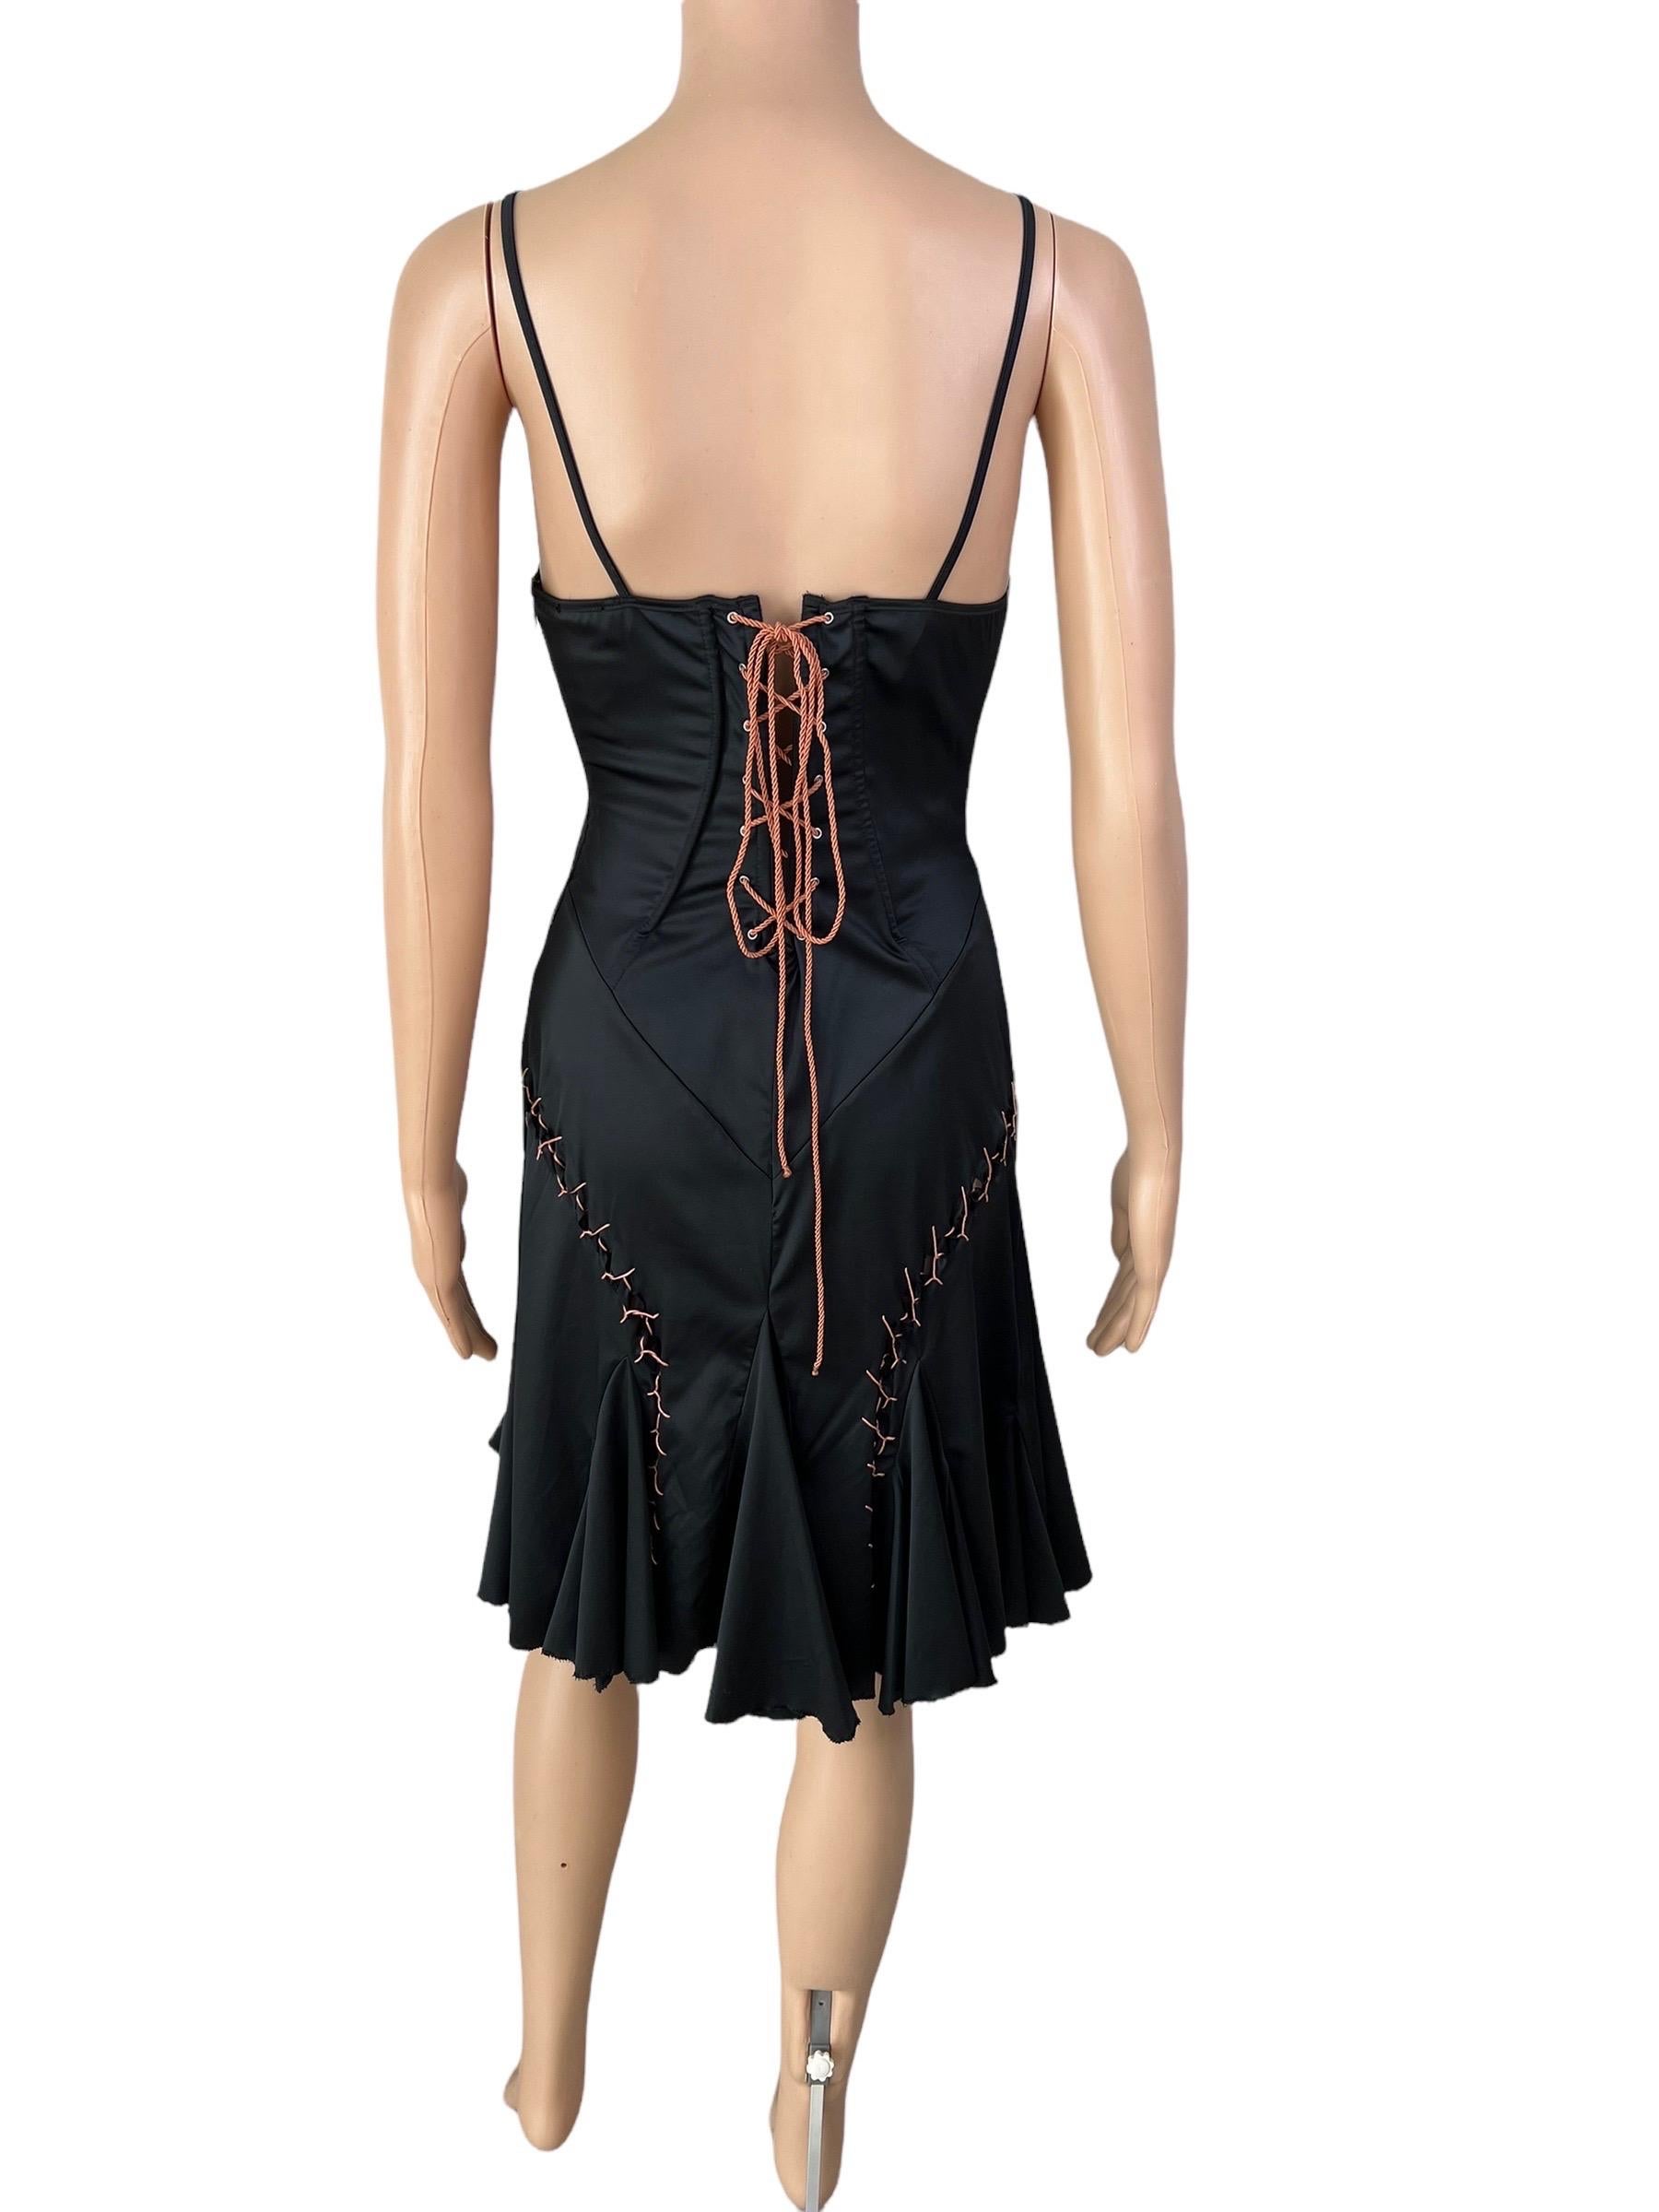 Roberto Cavalli Just Cavalli Lace Up Cutout Bustier Black Mini Dress For Sale 1